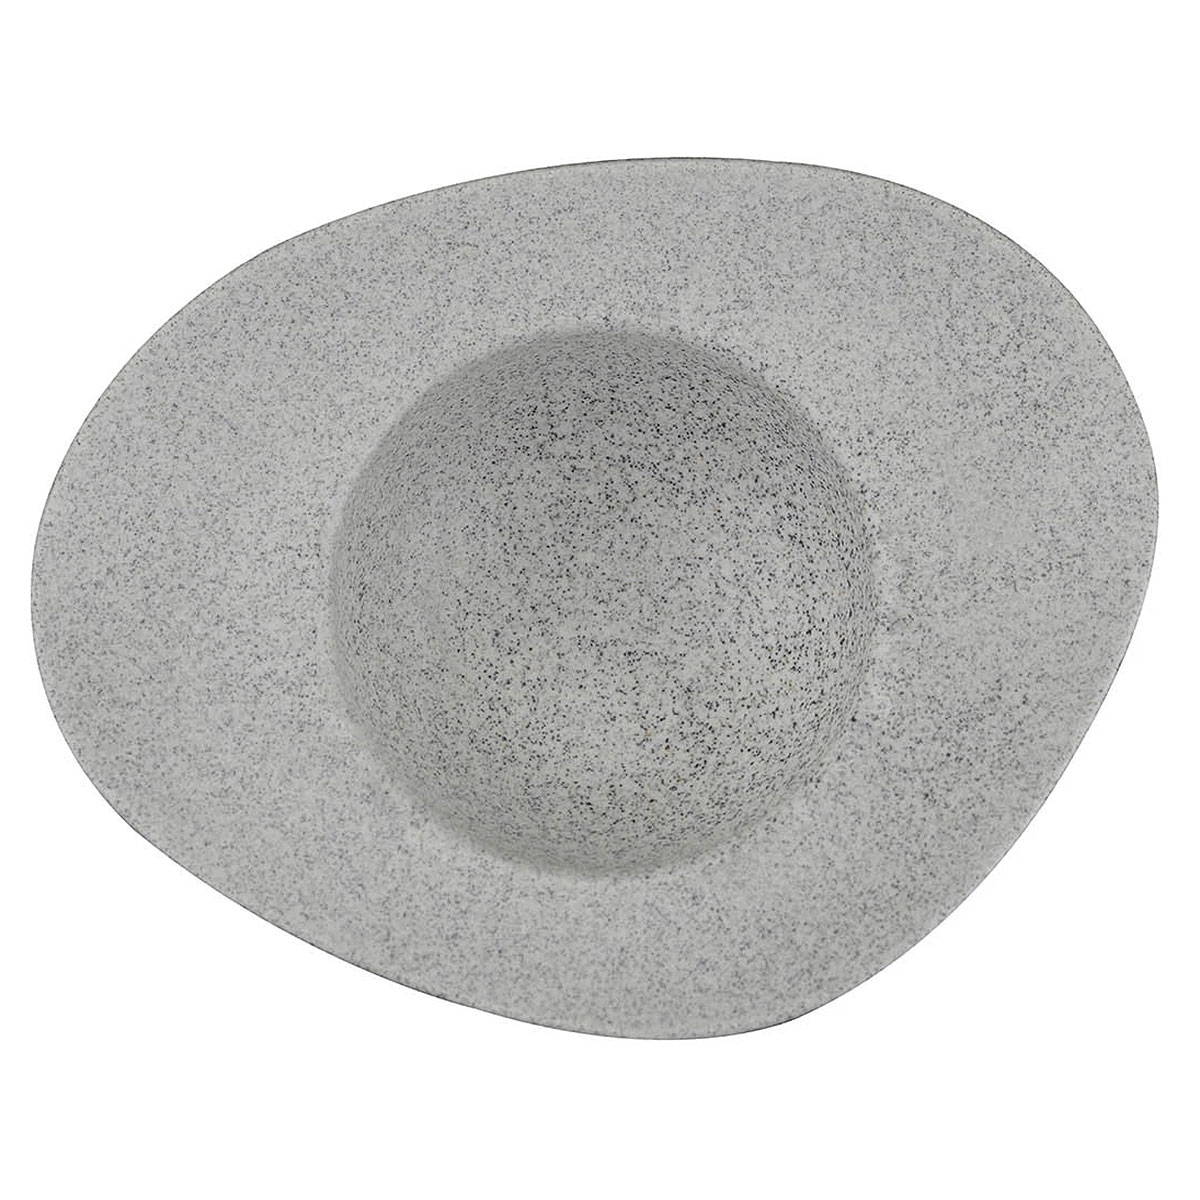 Тарелка для пасты Kutahya Galaxy, светло-серый тарелка steelite для пасты антуанетт 0 6 л 30 5 см зеленый фарфор 9019 c350